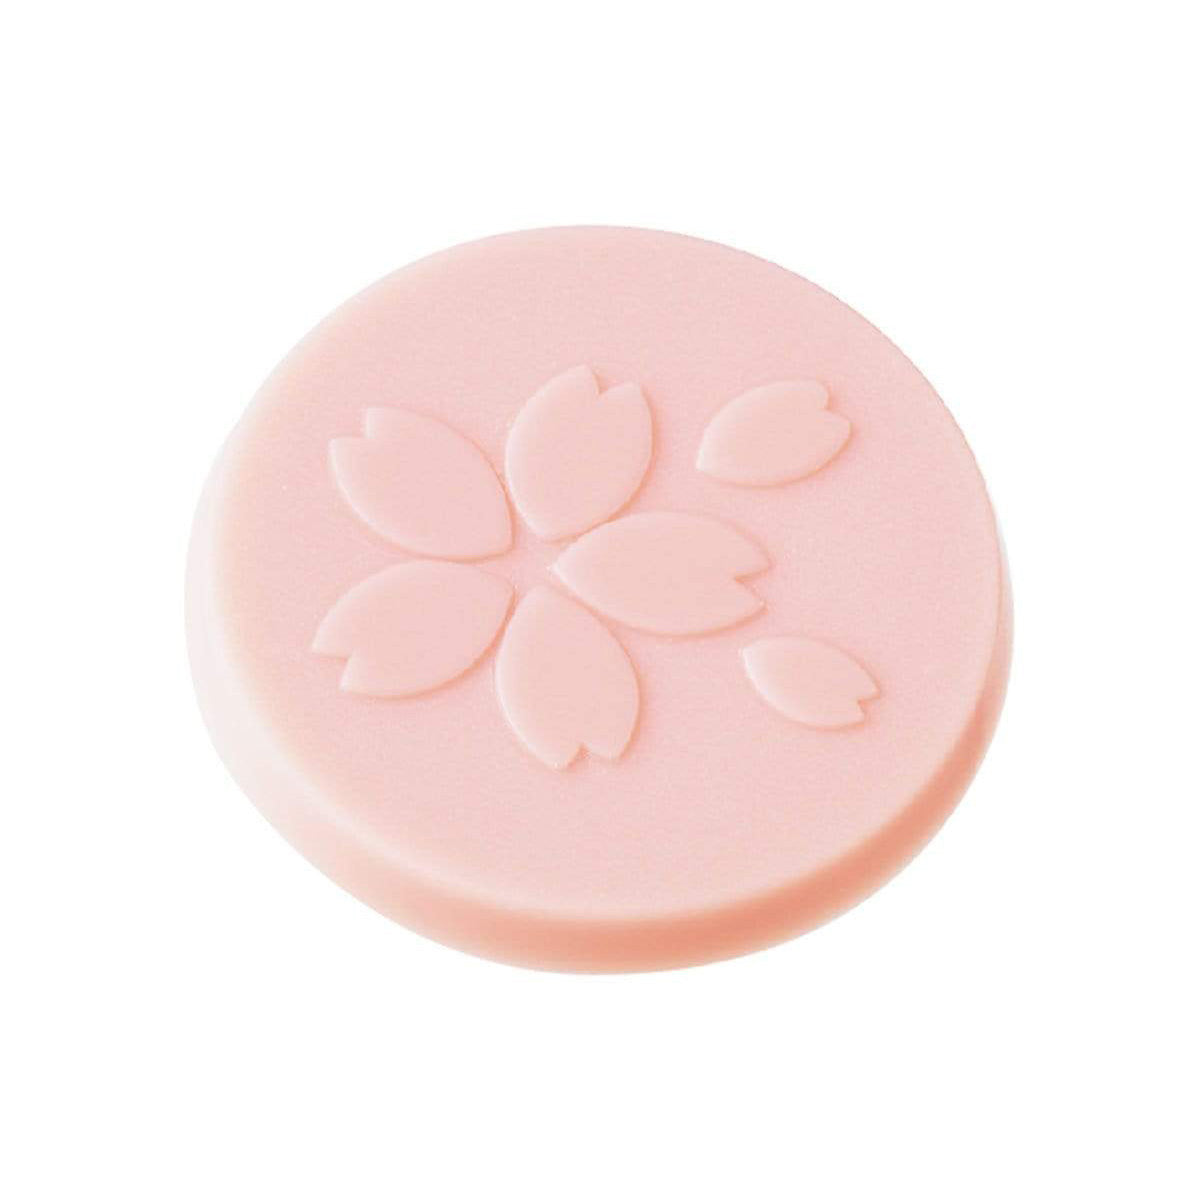 ROYCE' Chocolate - Sakuraberry & Sakurawhite Chocolate - Image shows a pink chocolate disc with floral engraving.